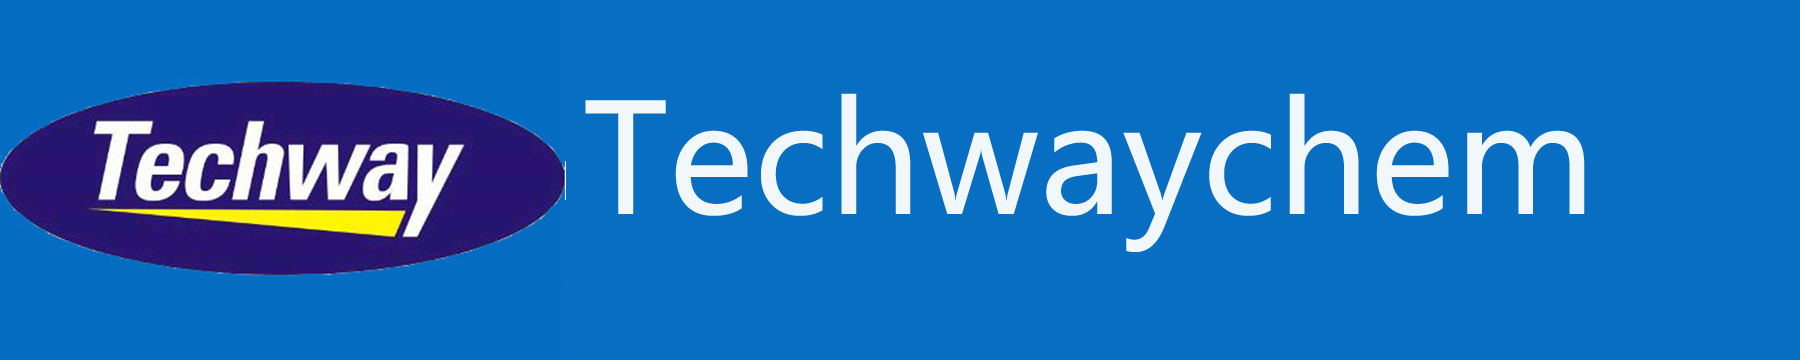 Henan Techway Chemical Co.,Ltd